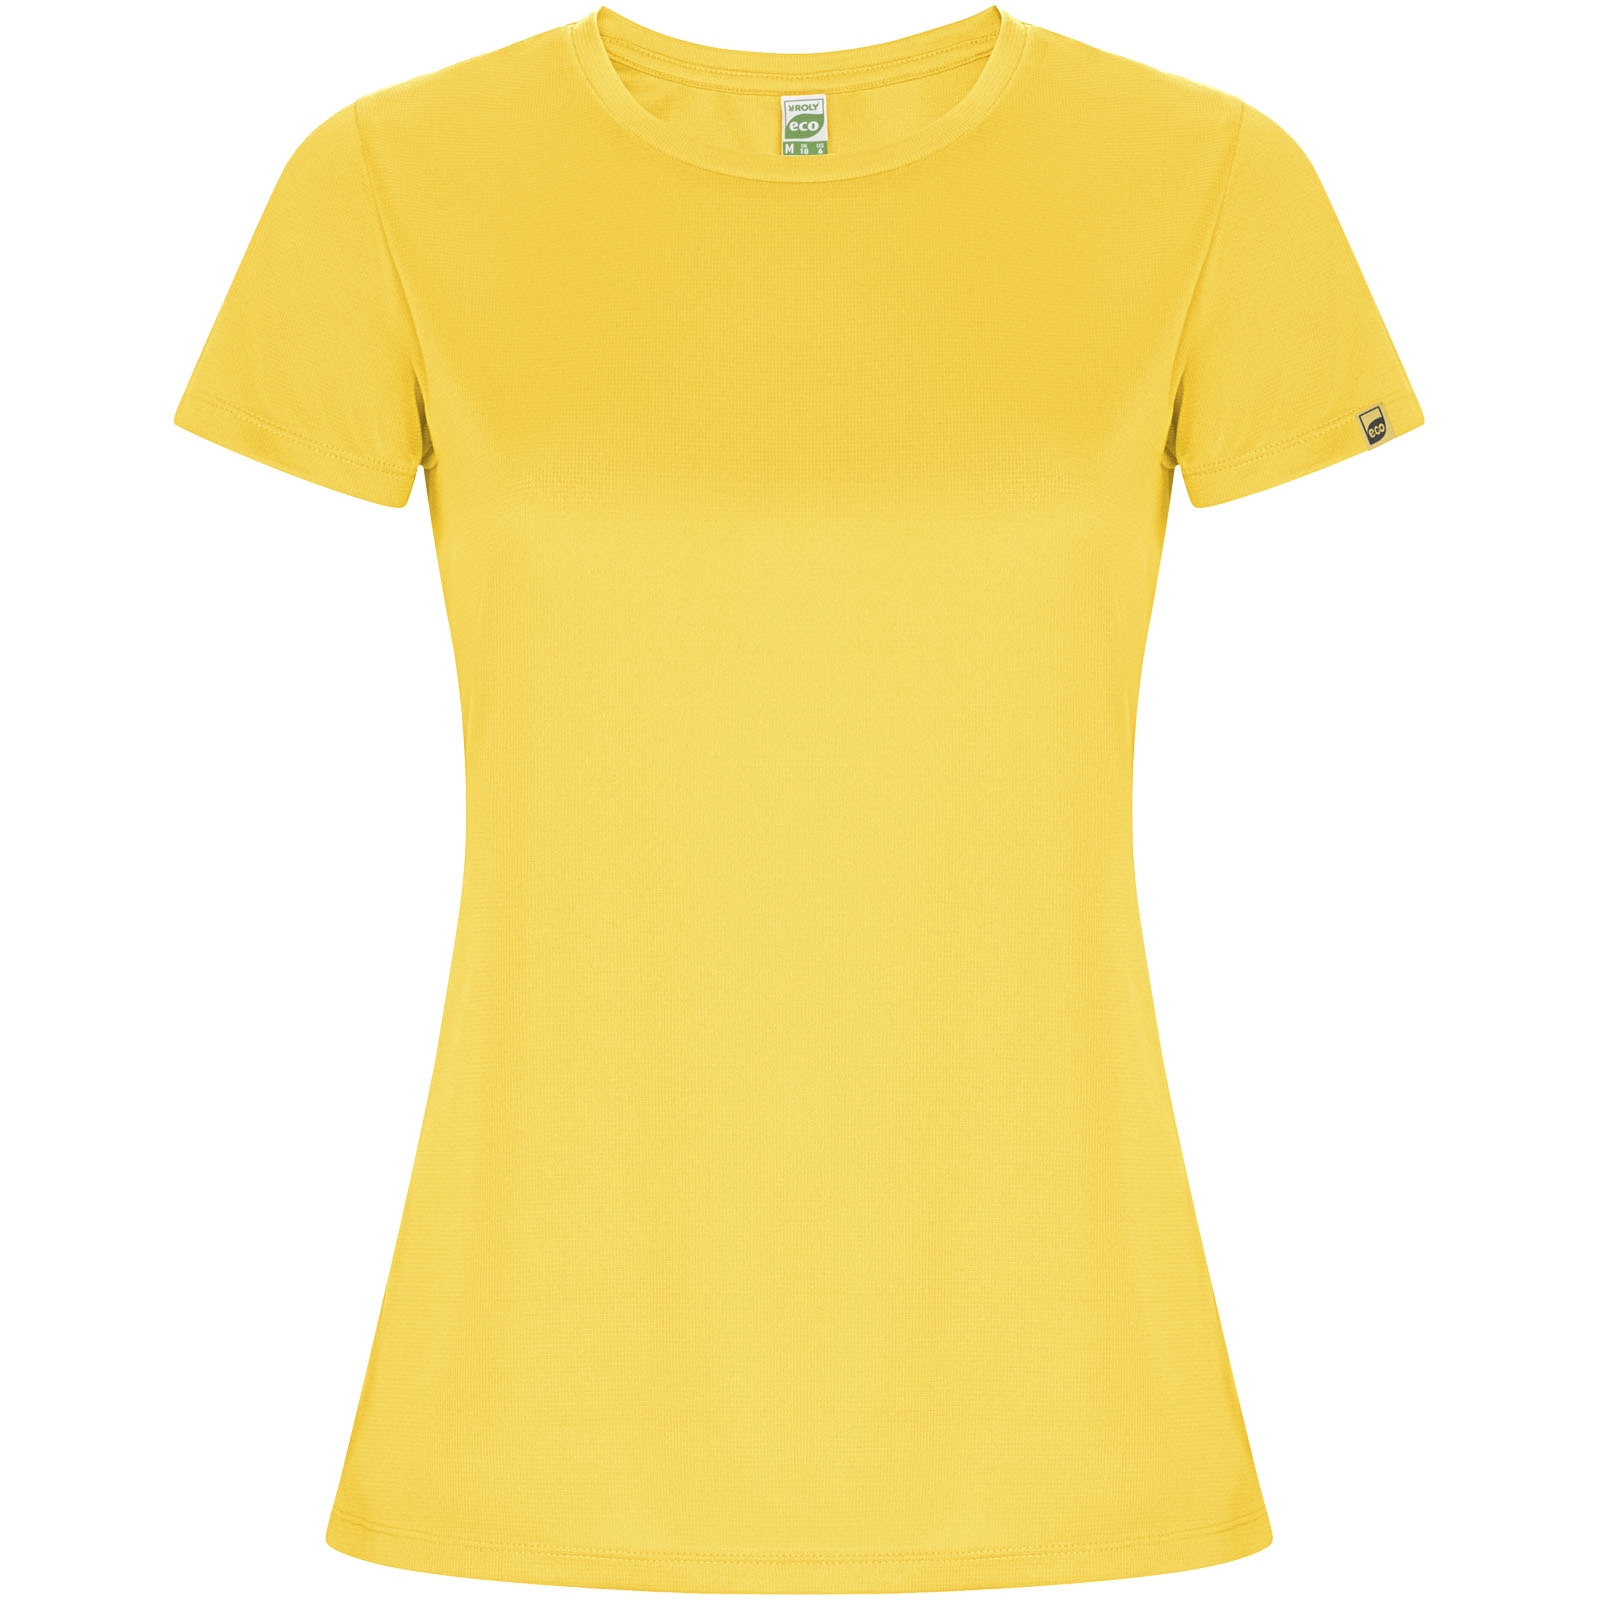 Advertising T-shirts - Imola short sleeve women's sports t-shirt